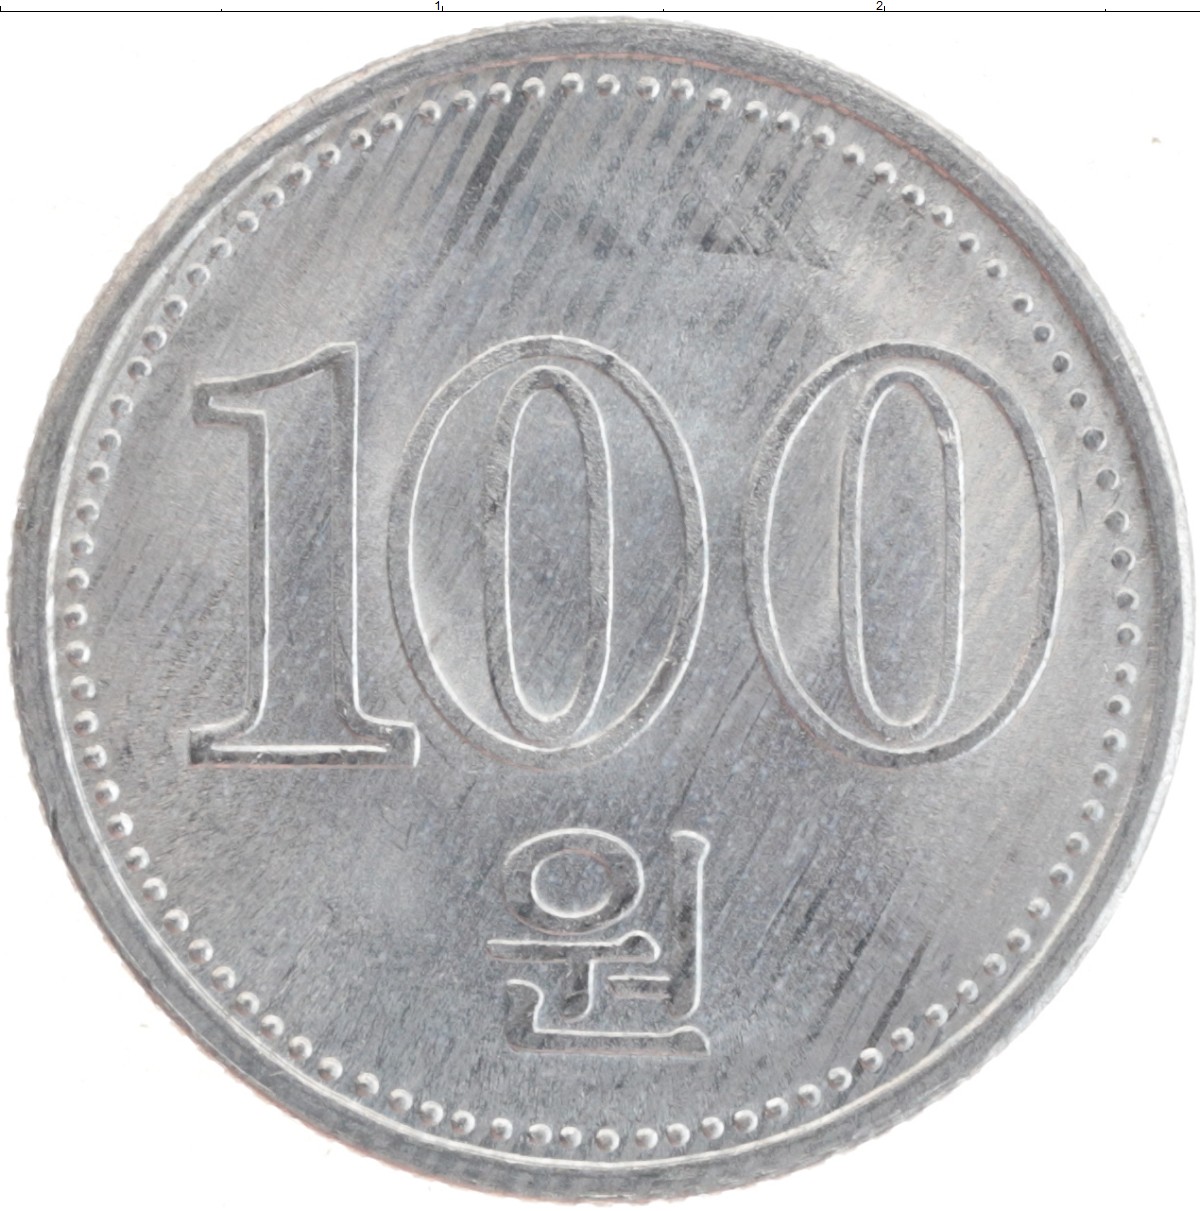 100 вон это сколько. 100 Вон Северная Корея. Монеты КНДР 100. Монета 100 вон перевертыш. Монетка корейская 100 вон.